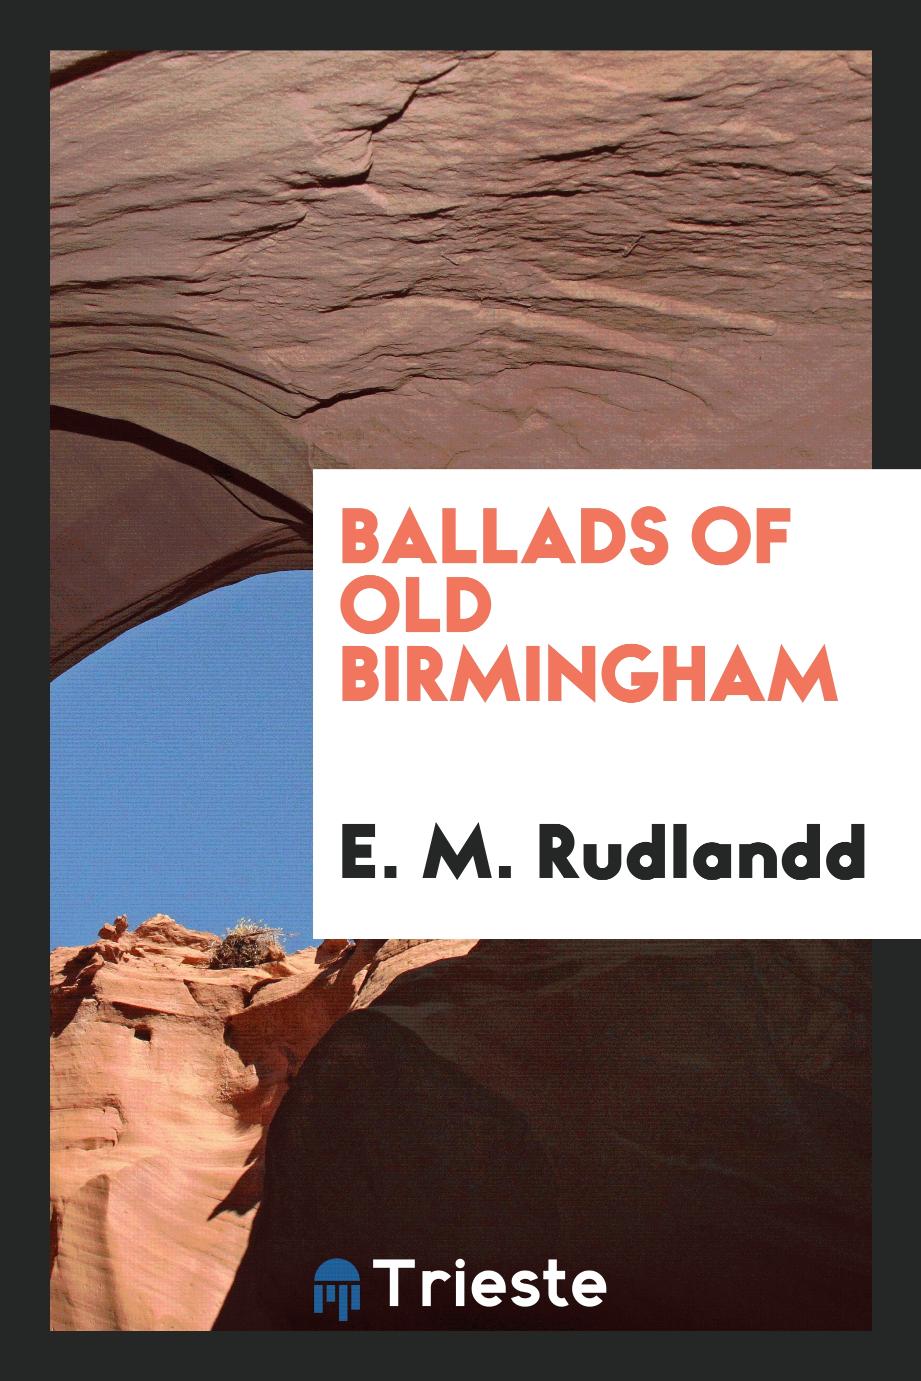 Ballads of old Birmingham